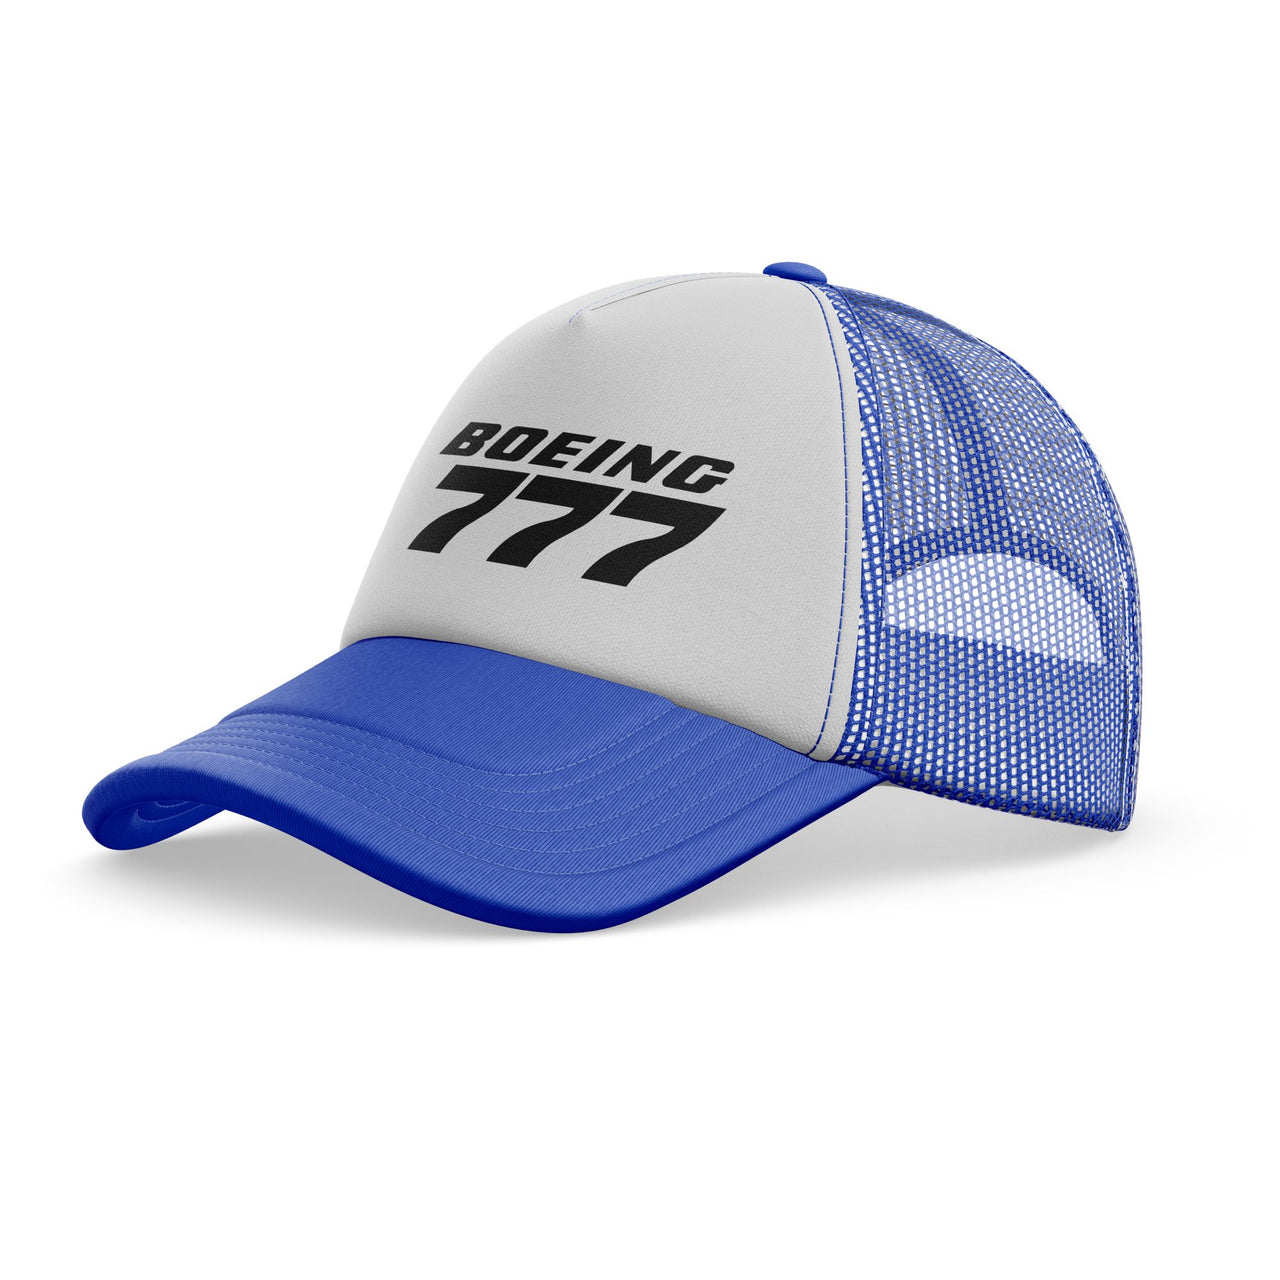 Boeing 777 & Text Designed Trucker Caps & Hats